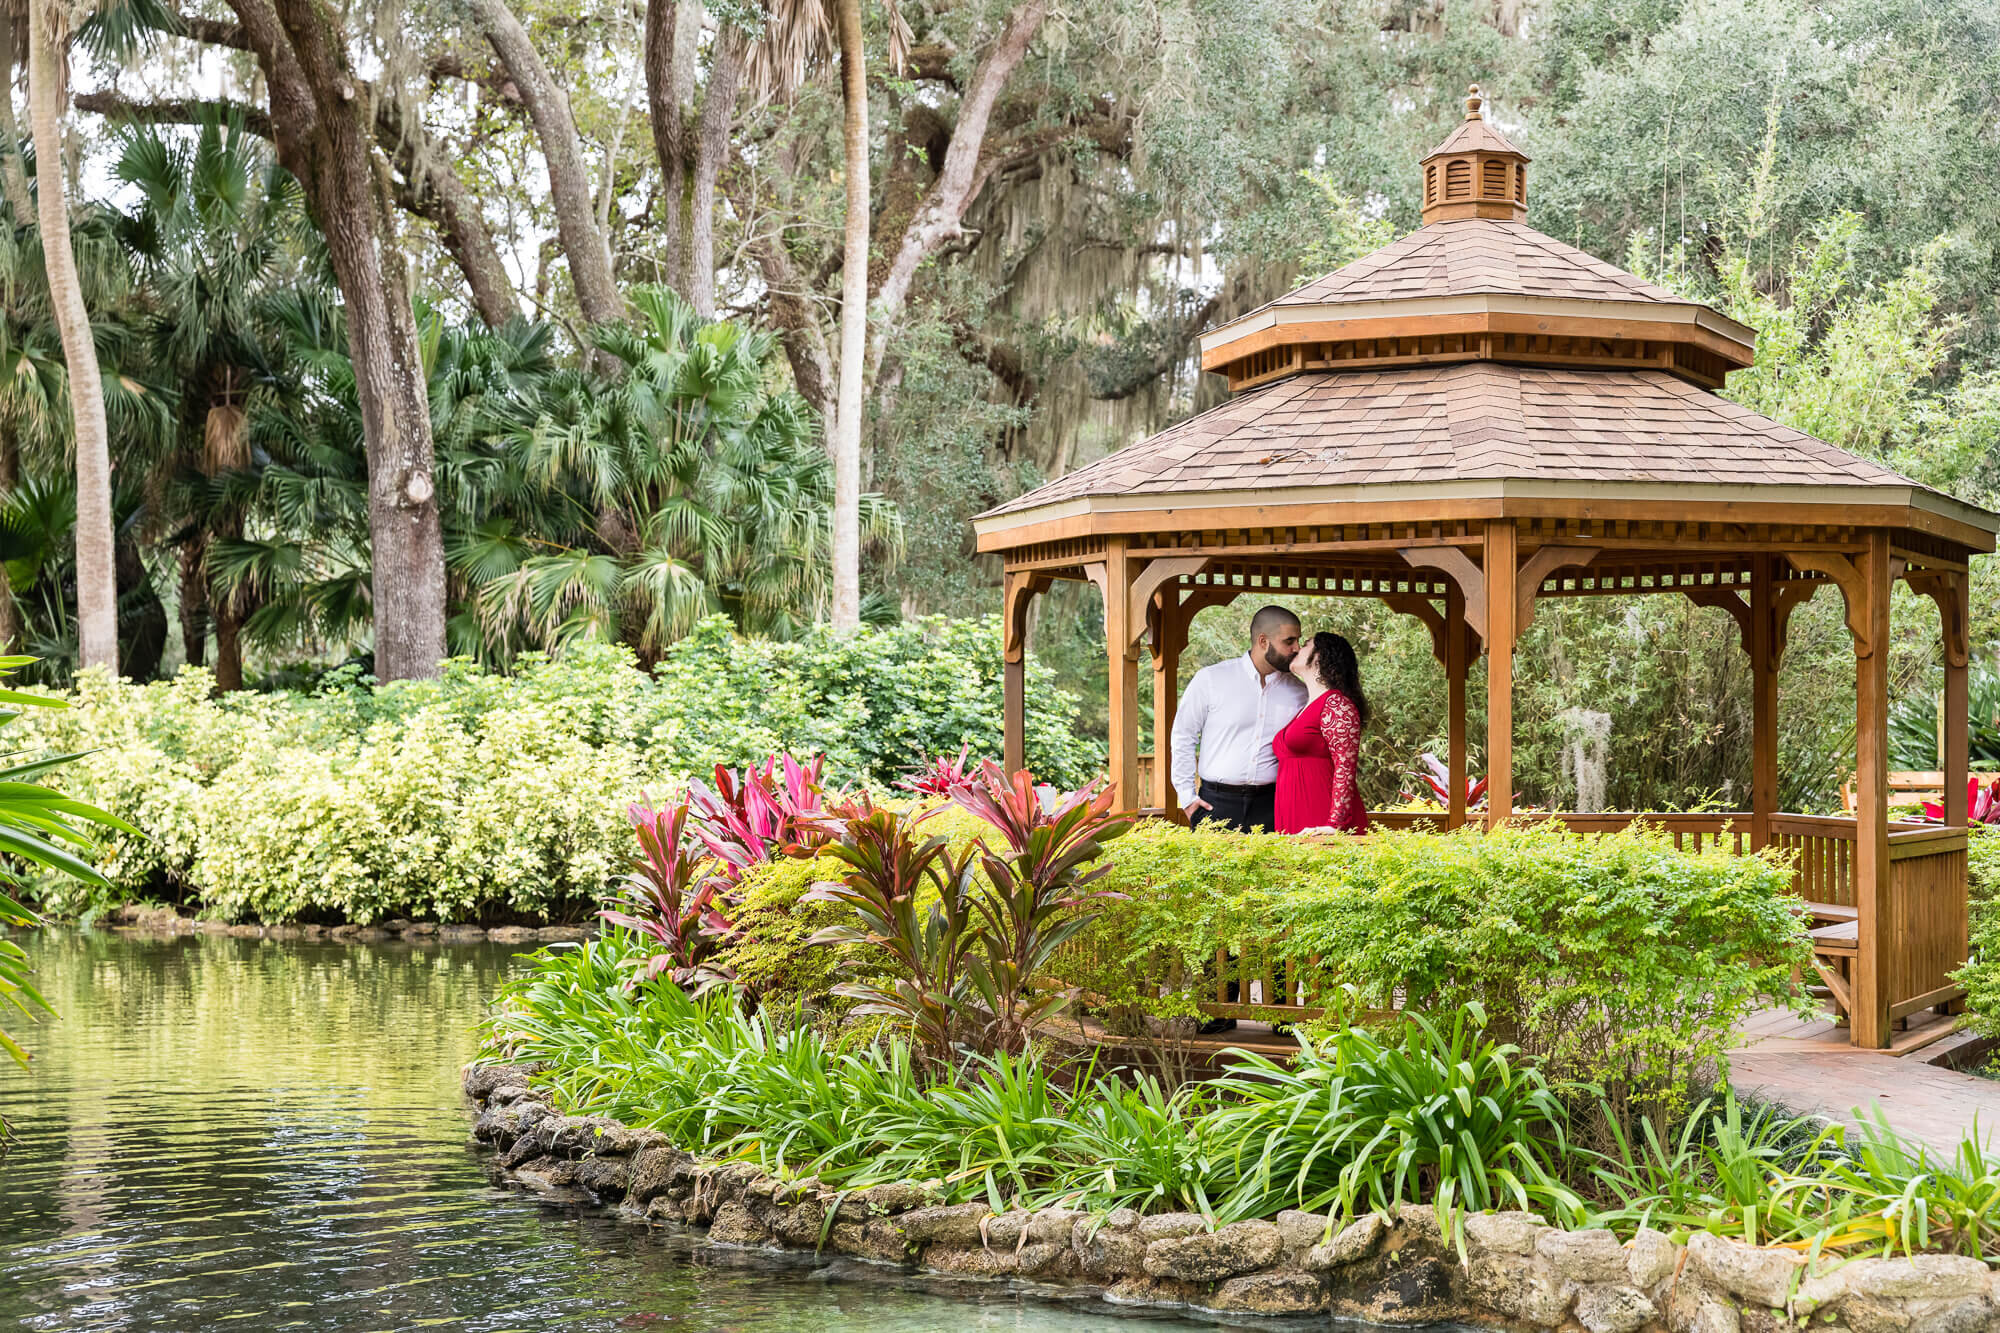  Washington Oaks Gardens Engagement Photos, Palm Coast, Florida 